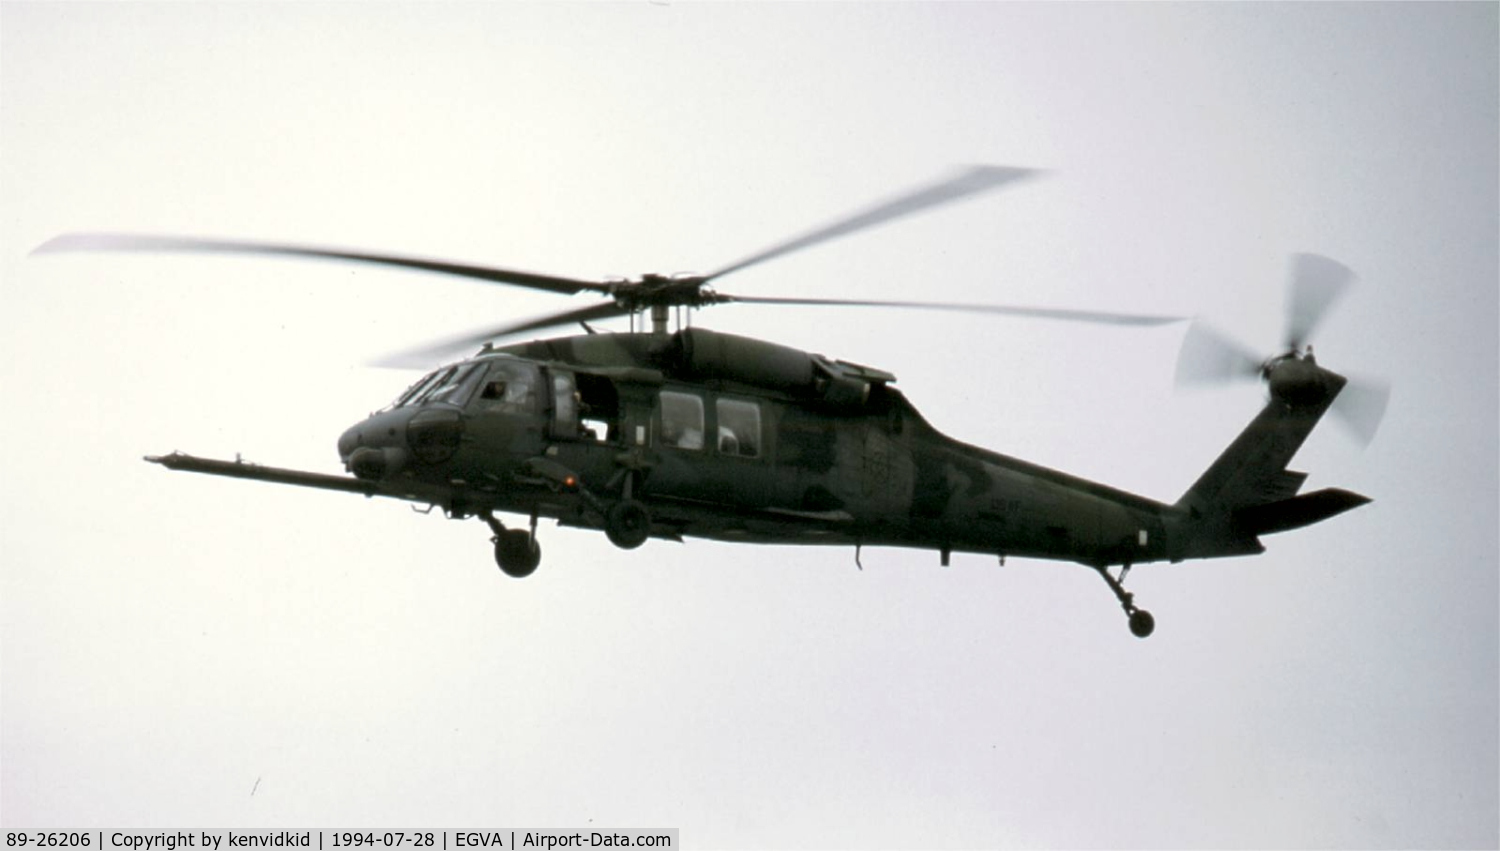 89-26206, 1989 Sikorsky HH-60G Pave Hawk C/N 70-1435, US Air Force arriving at RIAT.